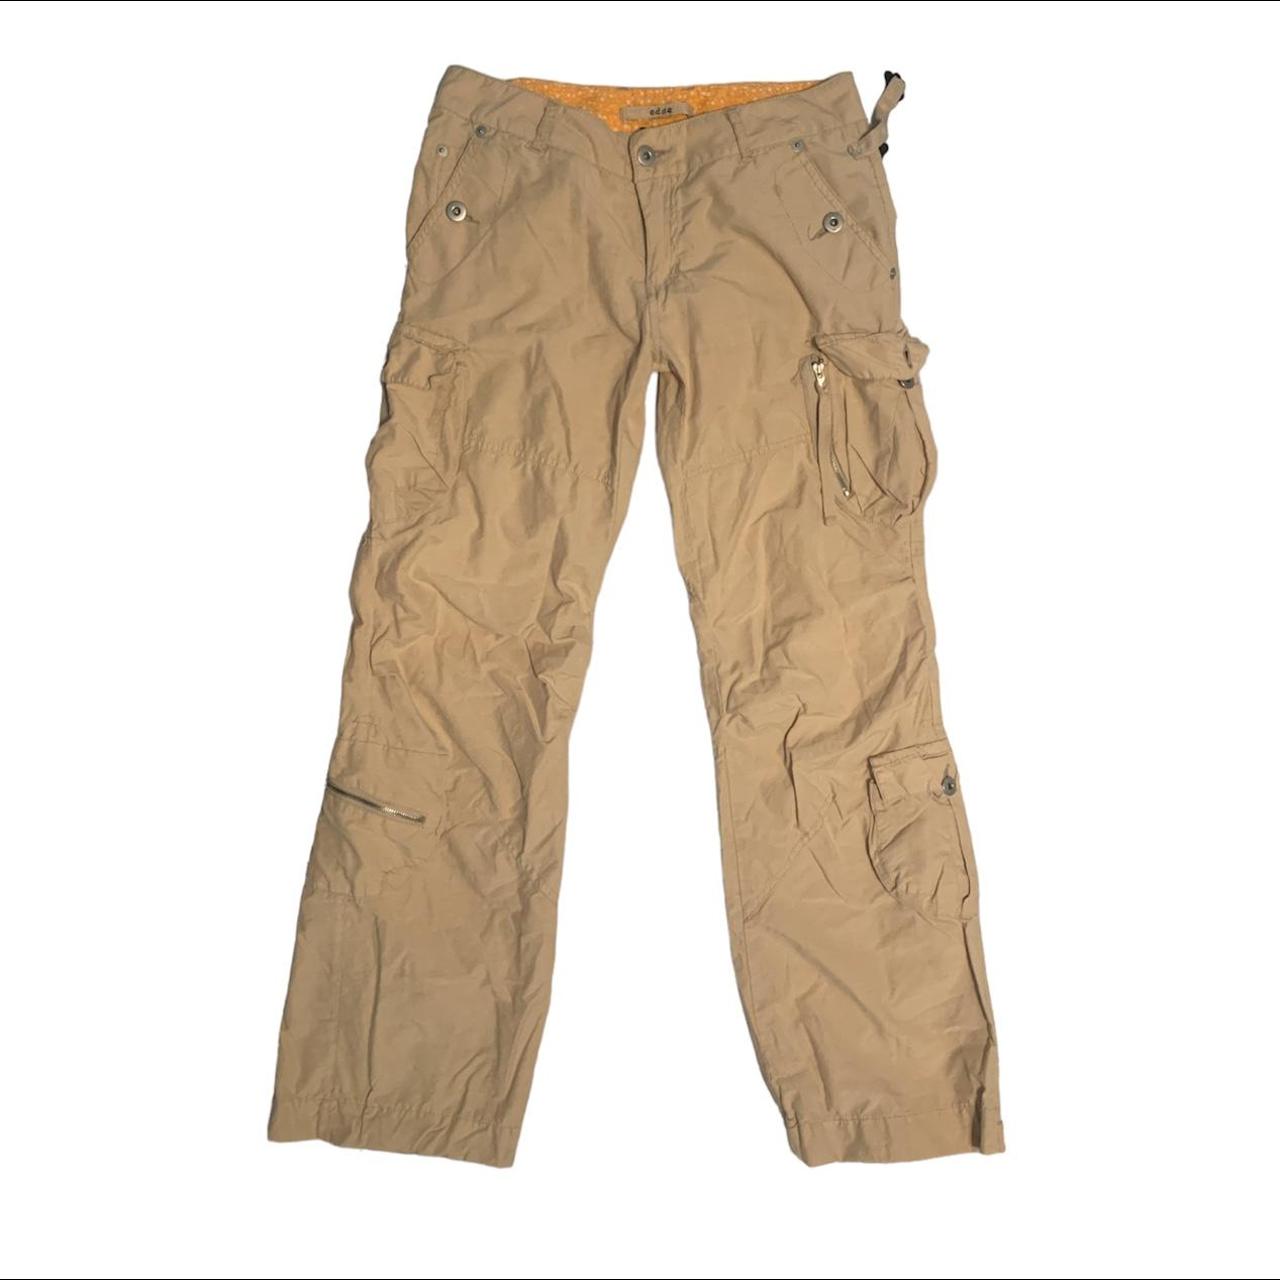 (Repop) low rise tan cream cargo pants Labeled a... - Depop